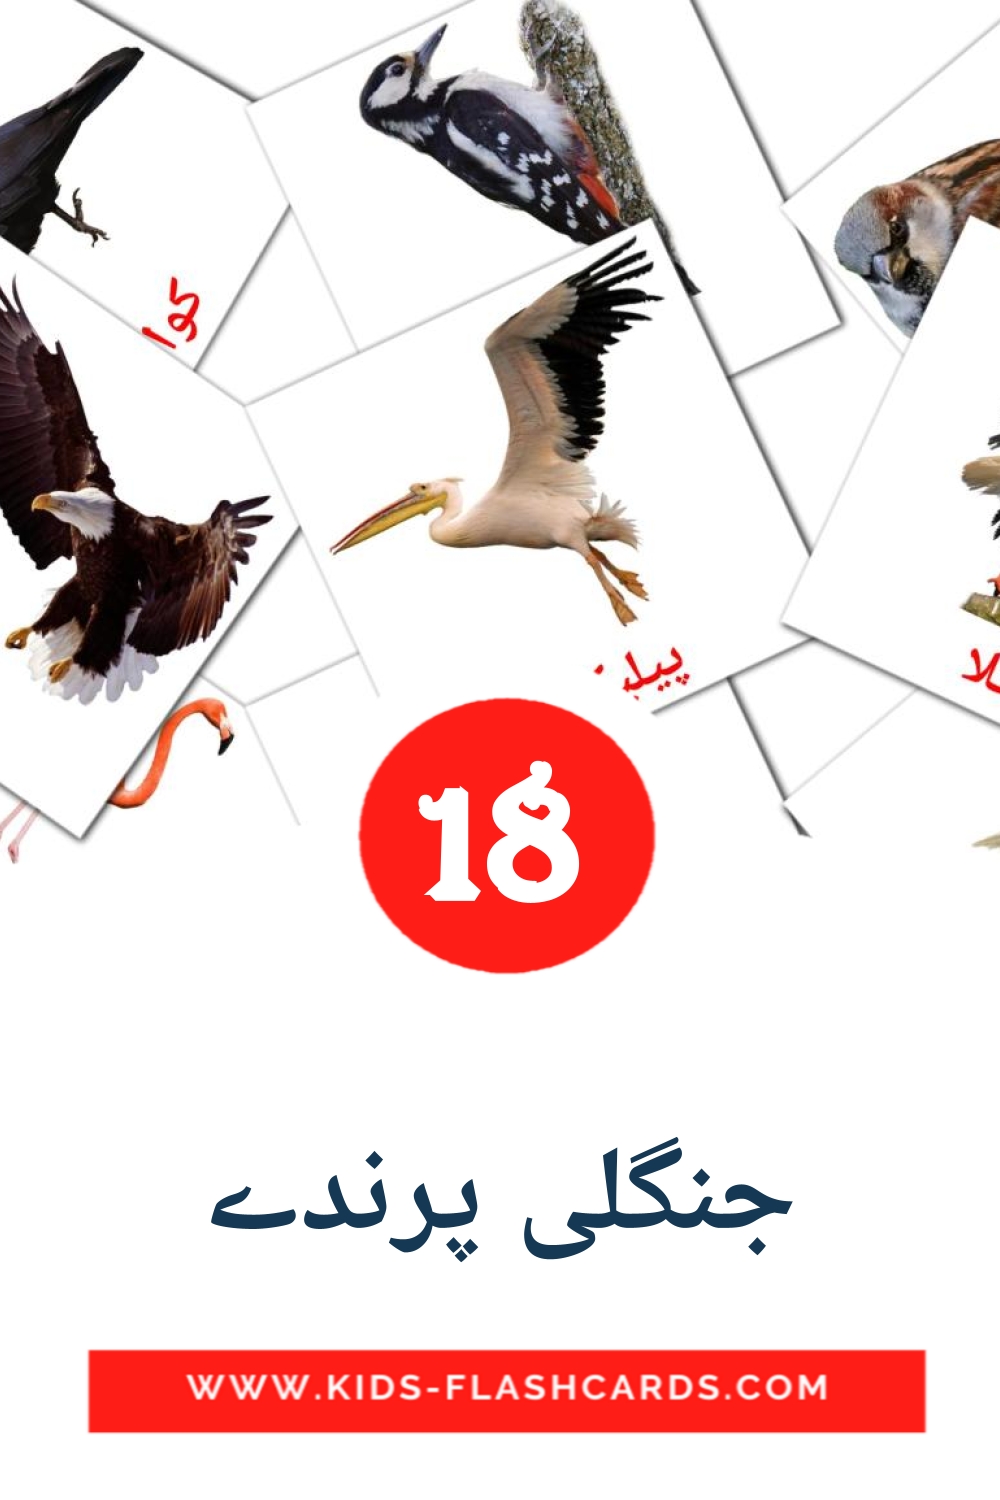 18 جنگلی پرندے Bildkarten für den Kindergarten auf Urdu